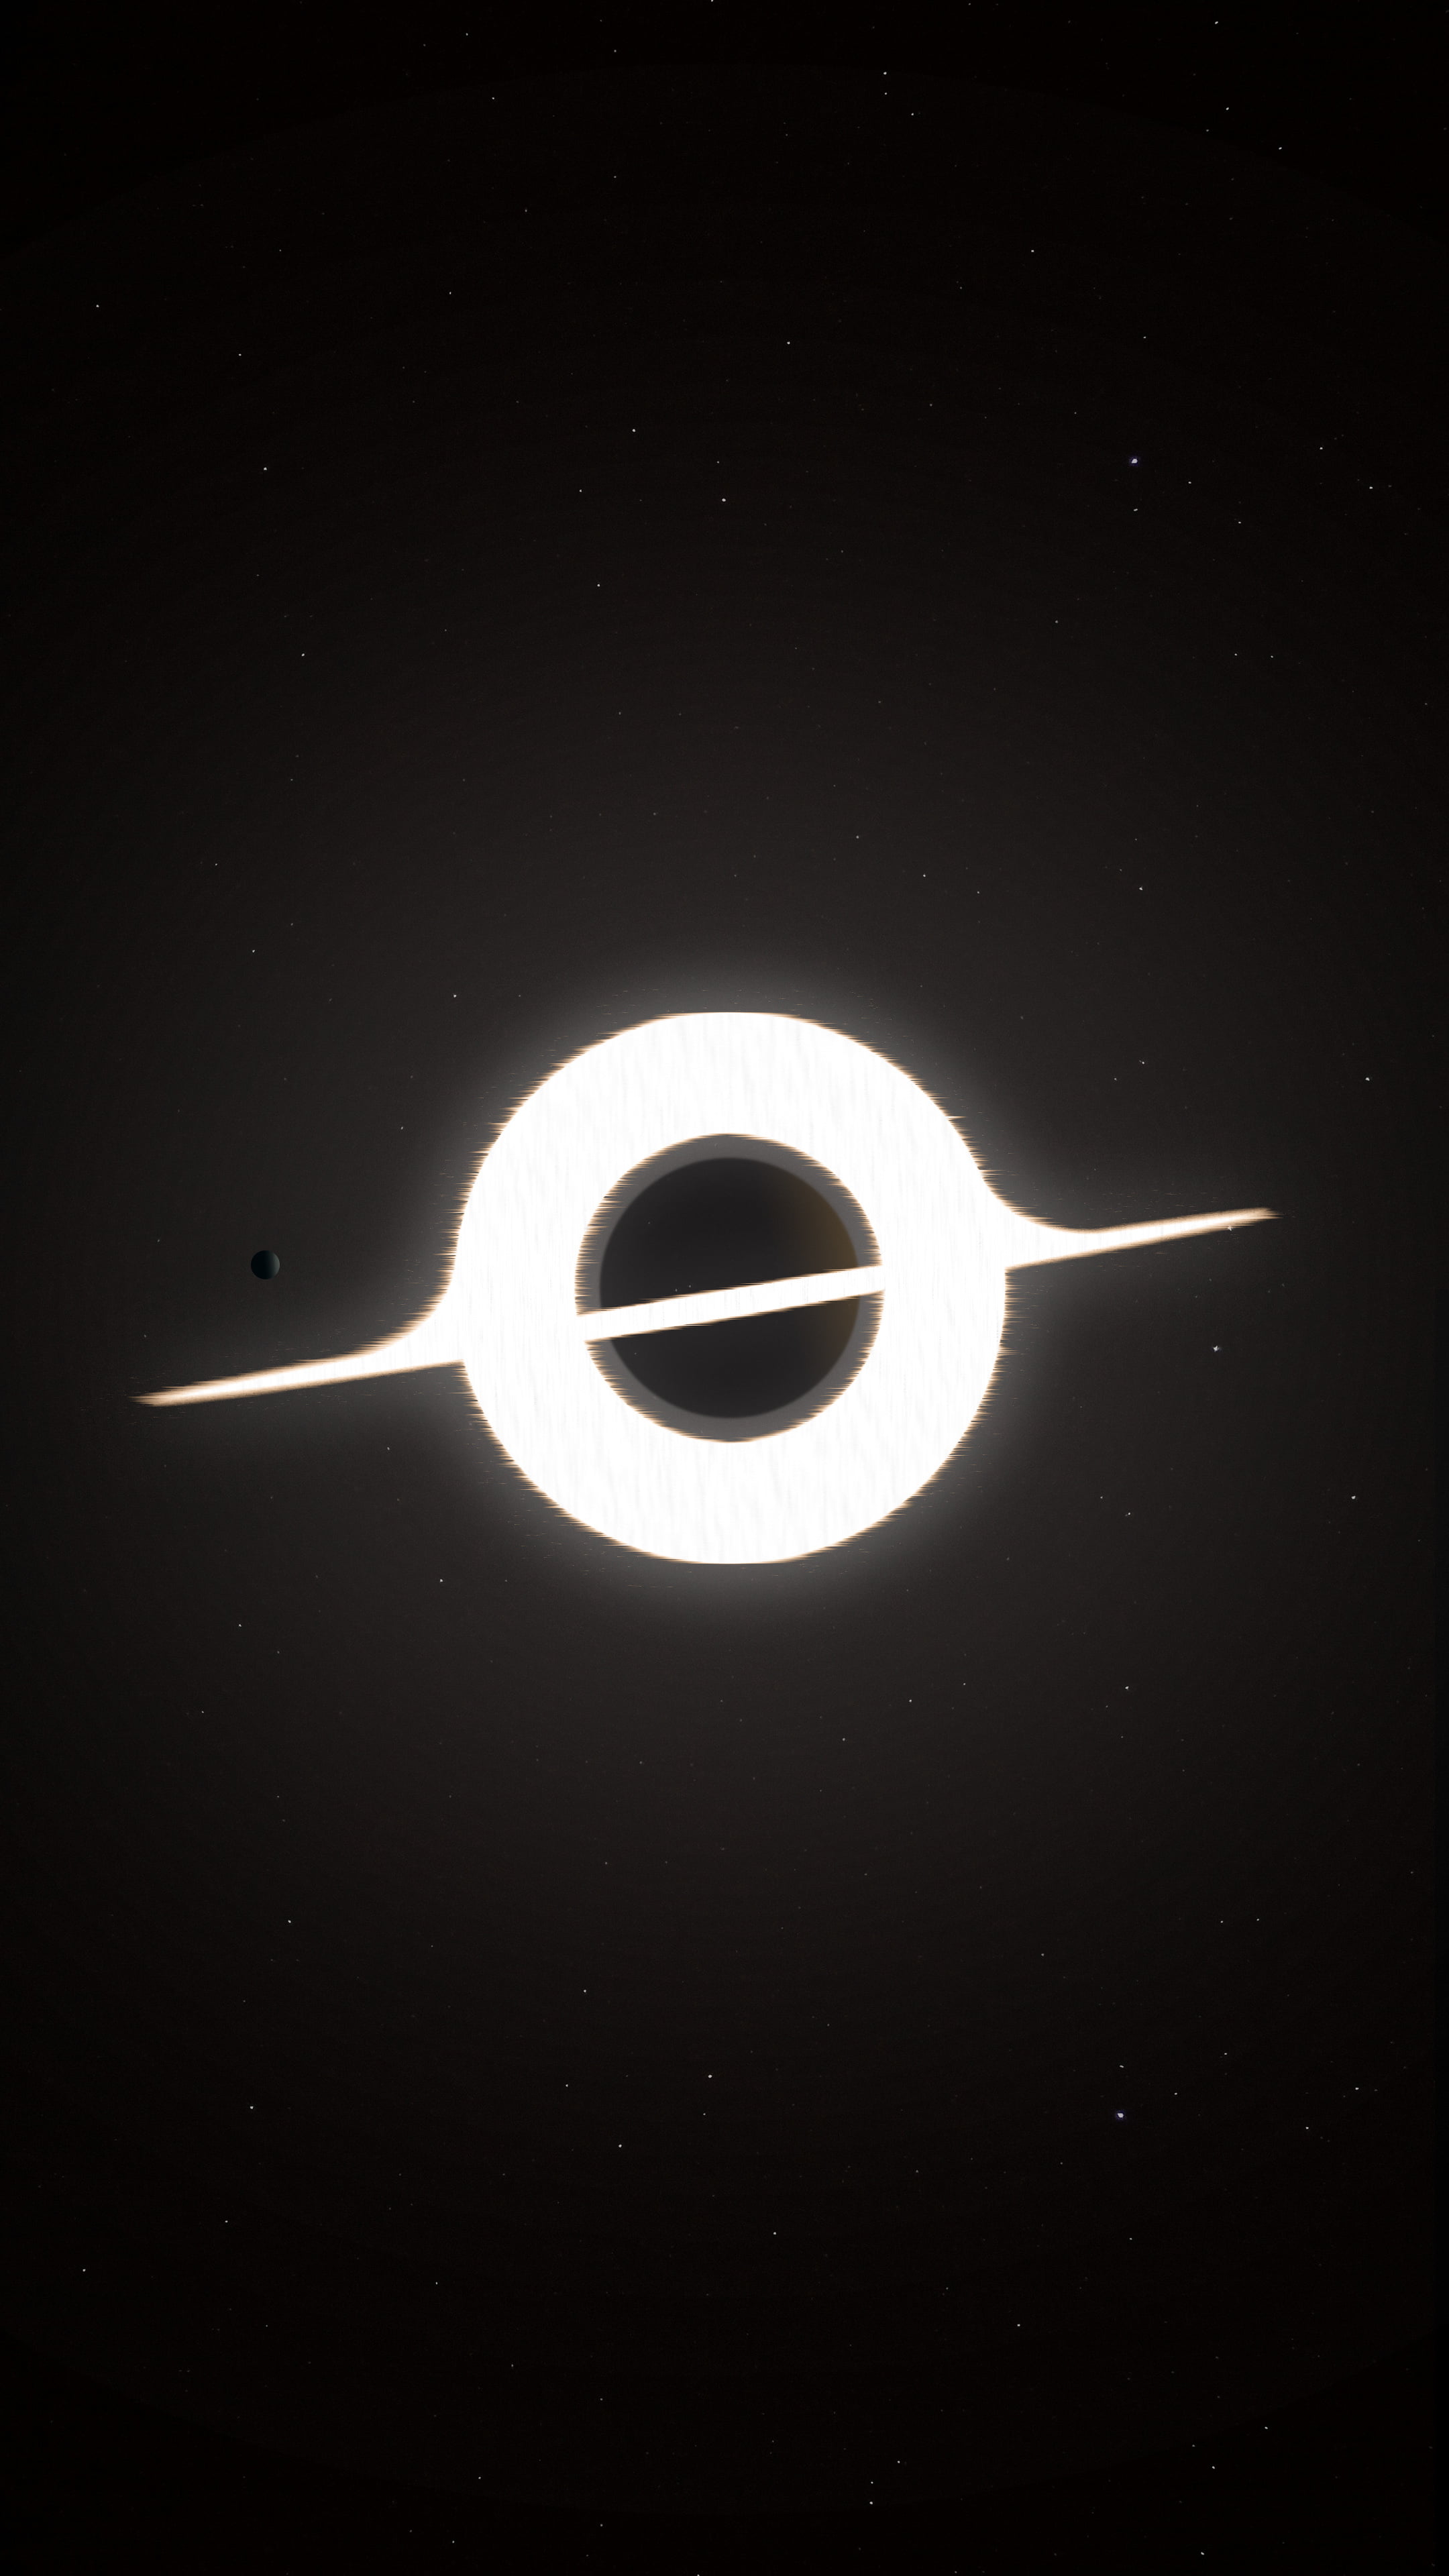 round white and black abstract illustration, Interstellar (movie), Gargantua , space, black holes